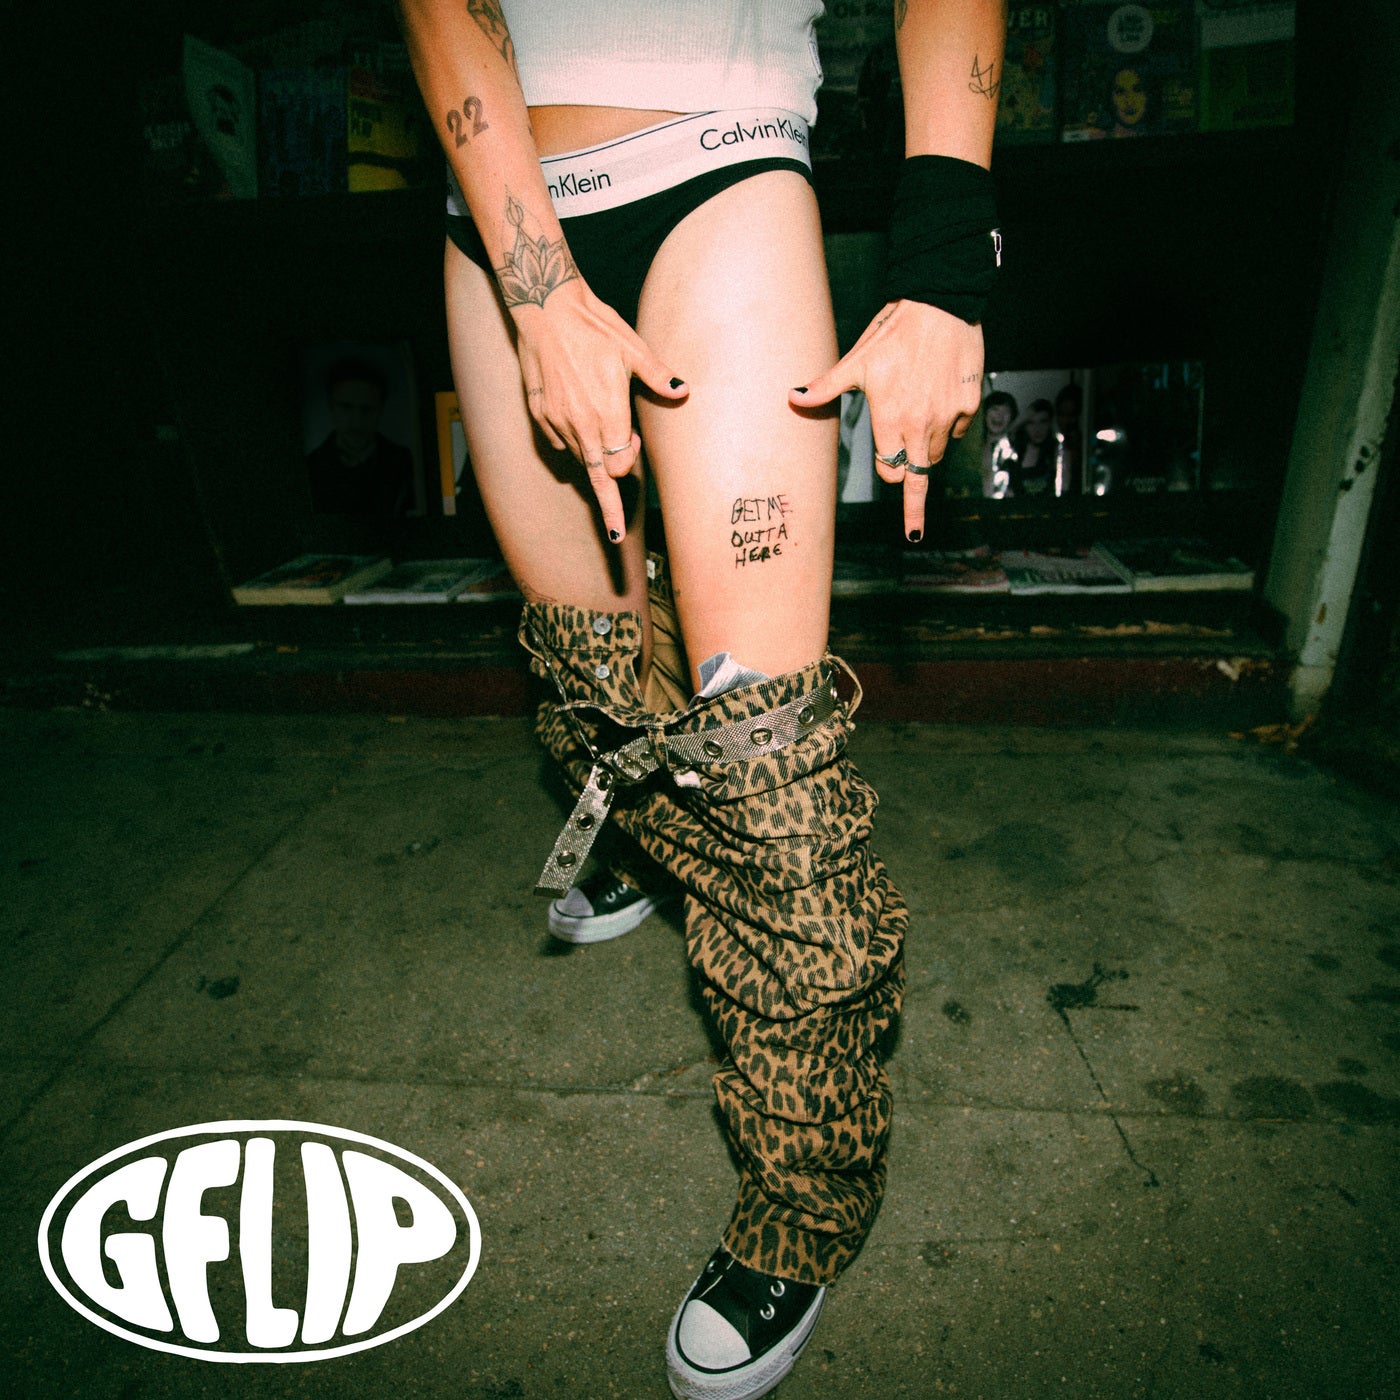 G Flip music download - Beatport